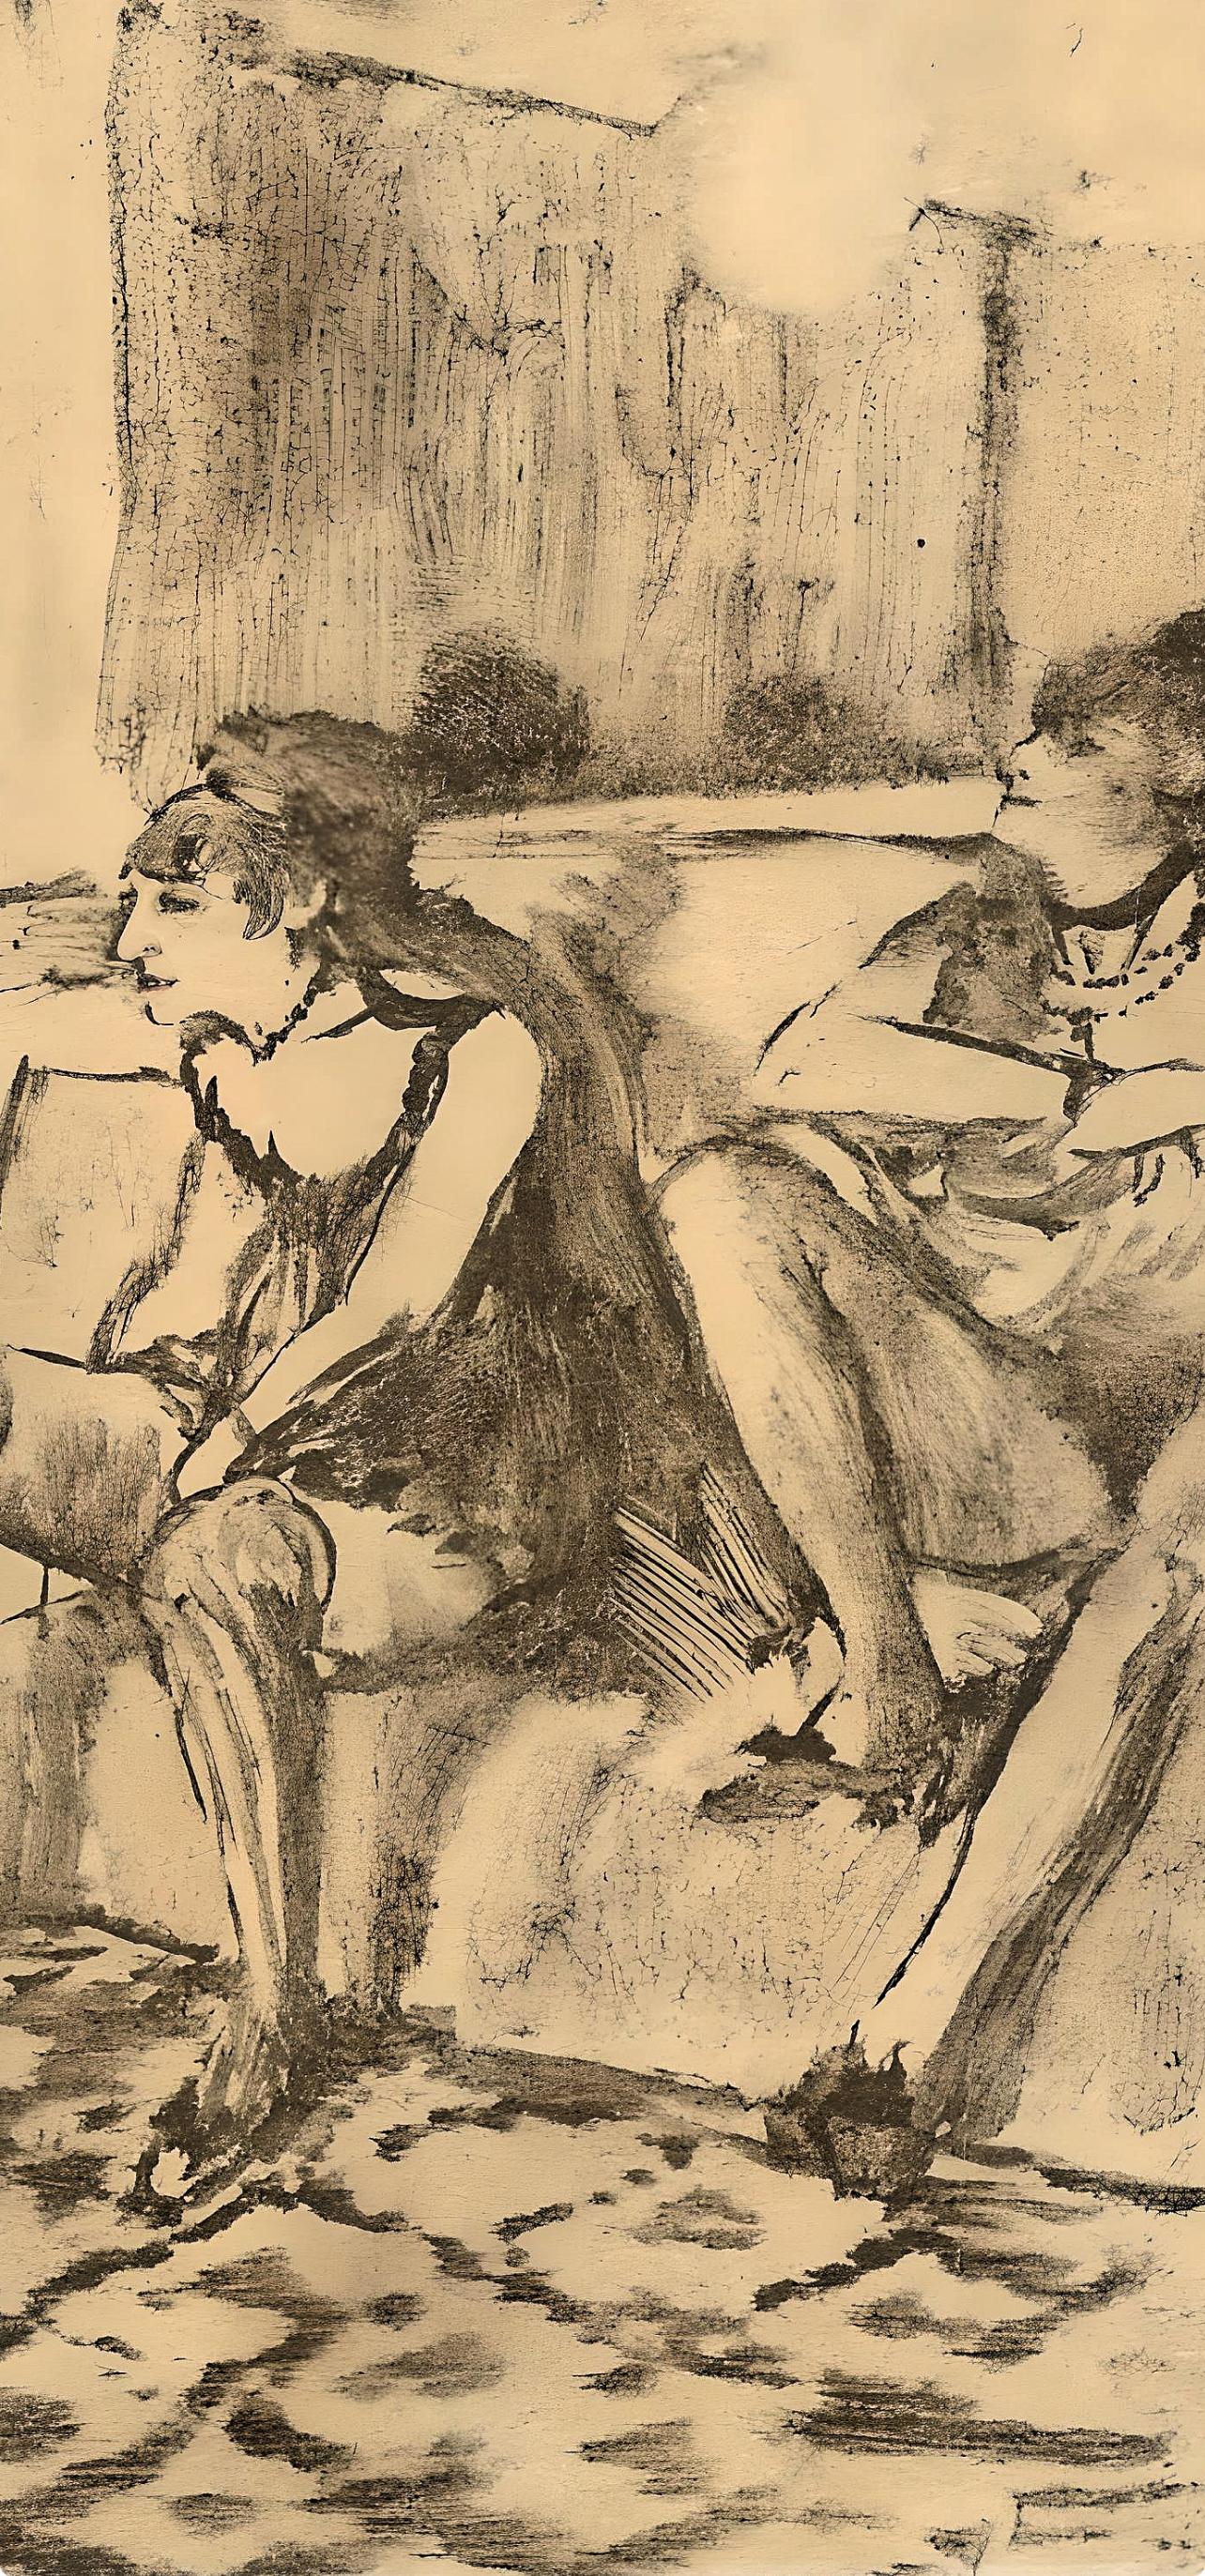 Degas, Deux Femmes, Les Monotypes (after) - Print by Edgar Degas